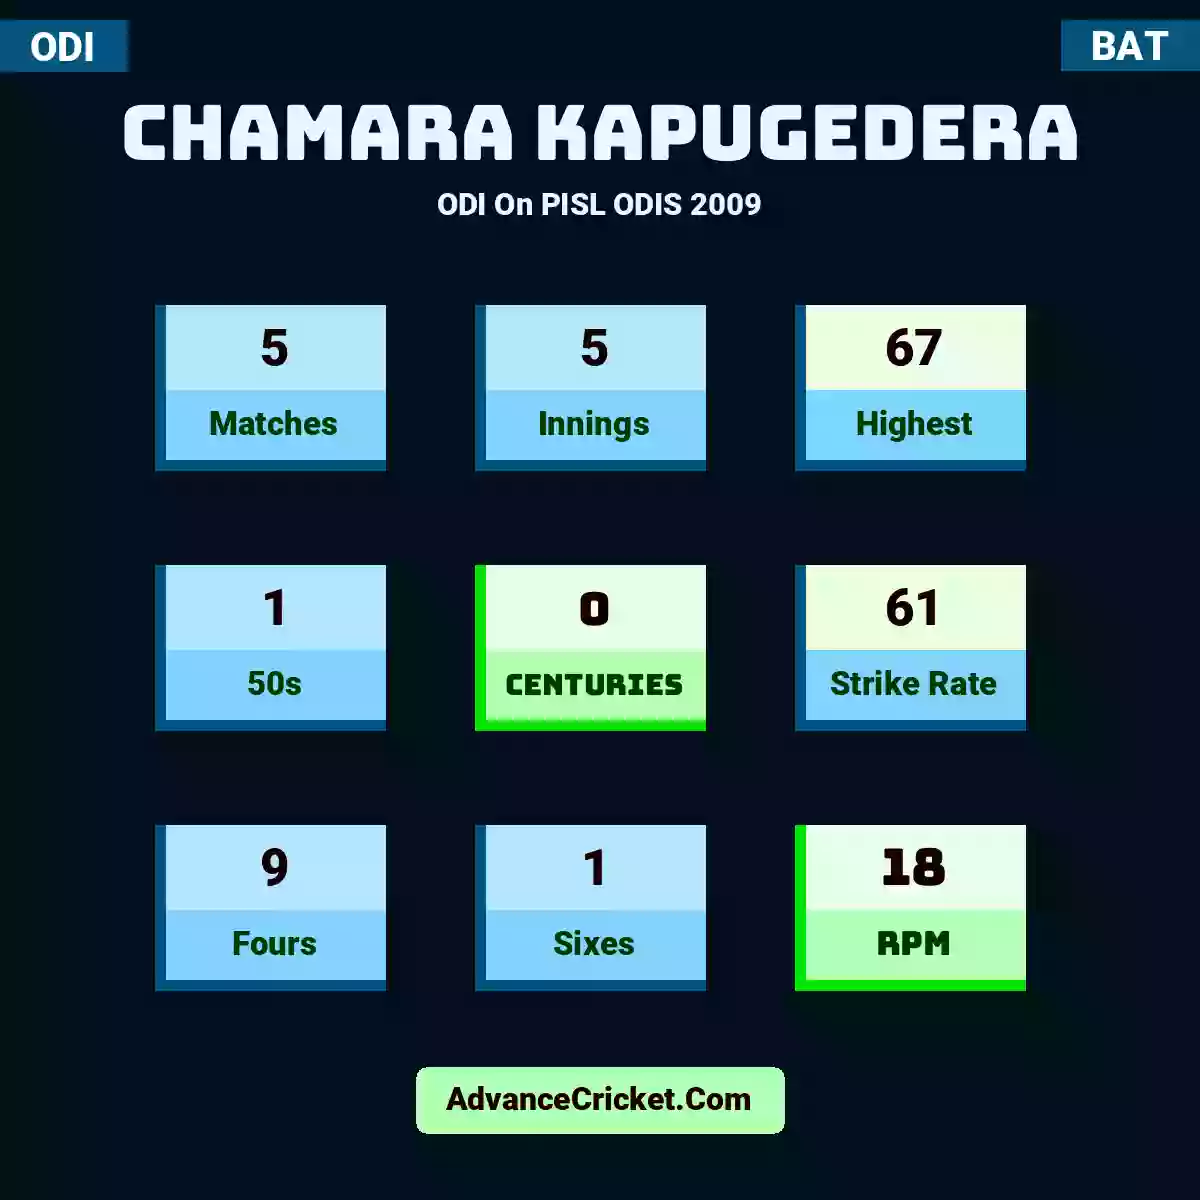 Chamara Kapugedera ODI  On PISL ODIS 2009, Chamara Kapugedera played 5 matches, scored 67 runs as highest, 1 half-centuries, and 0 centuries, with a strike rate of 61. C.Kapugedera hit 9 fours and 1 sixes, with an RPM of 18.